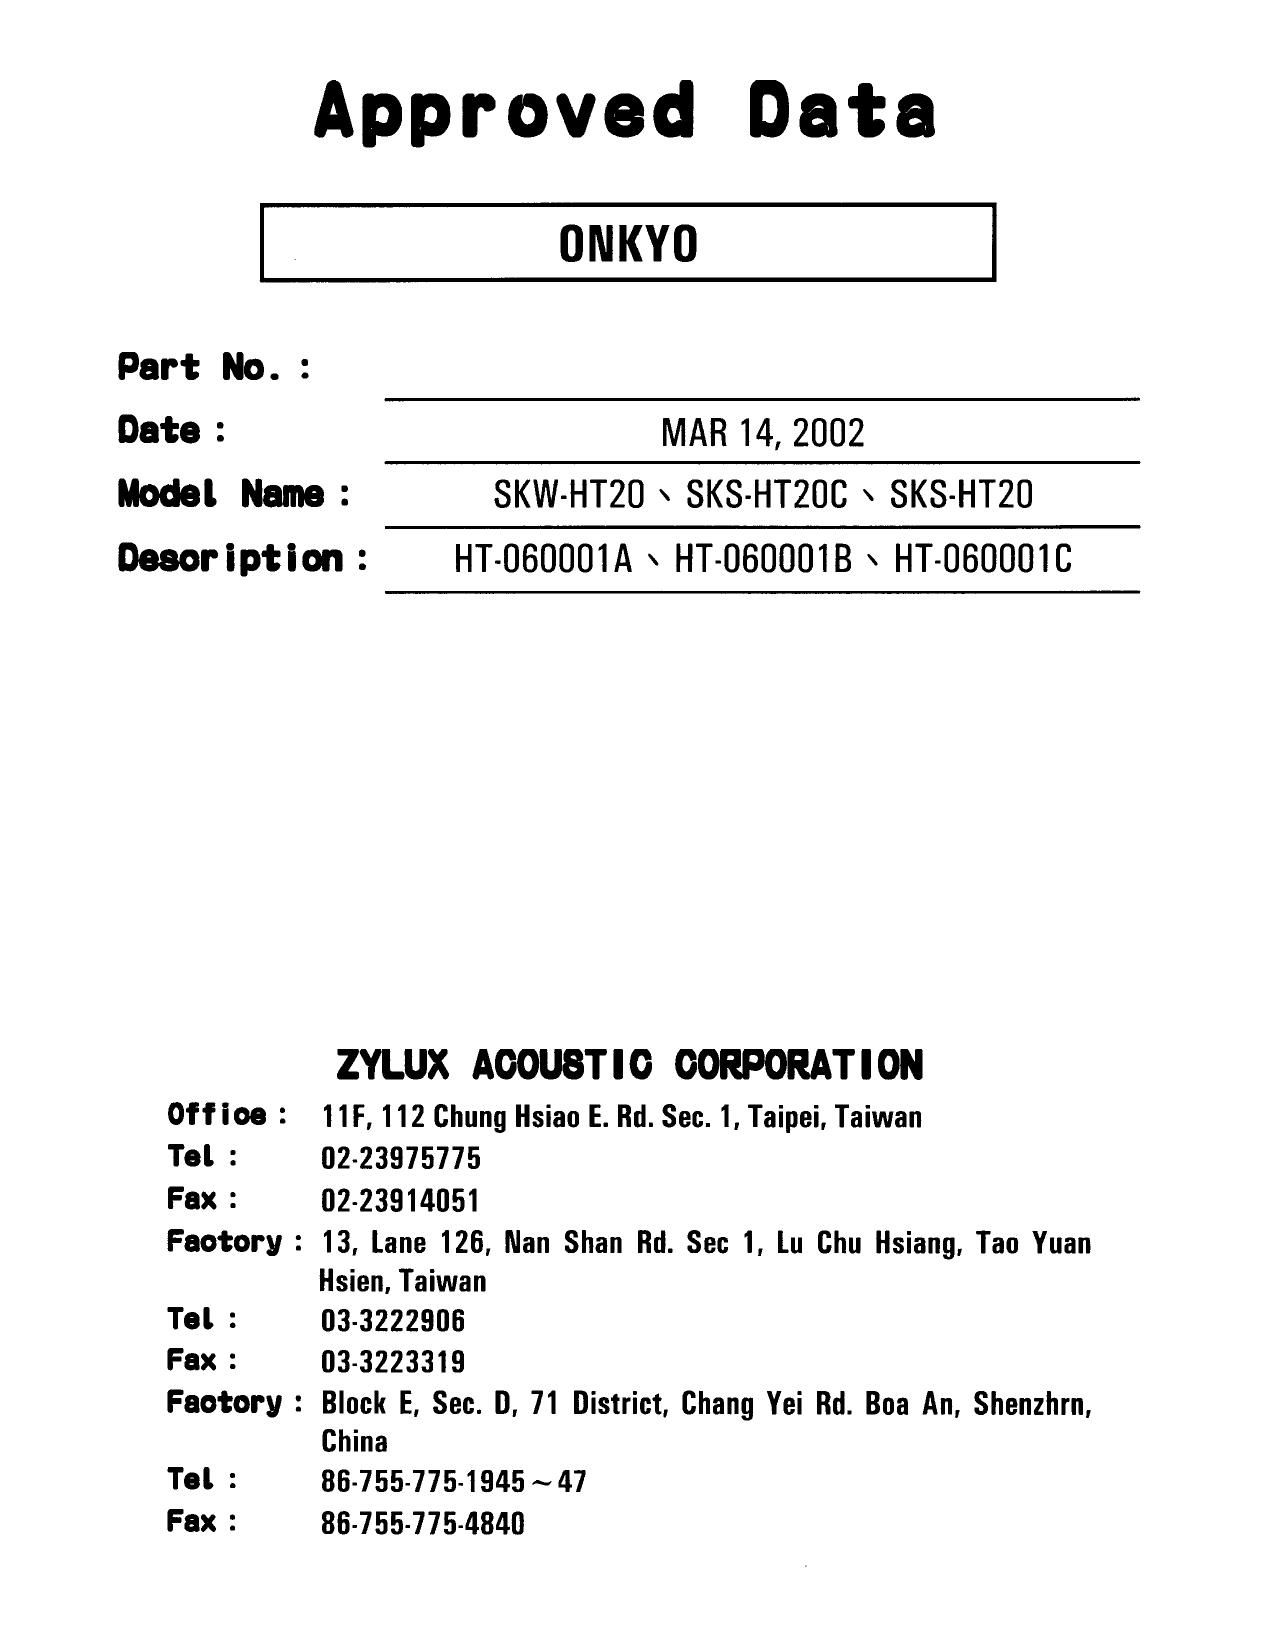 Onkyo SKWHT 20 Service Manual